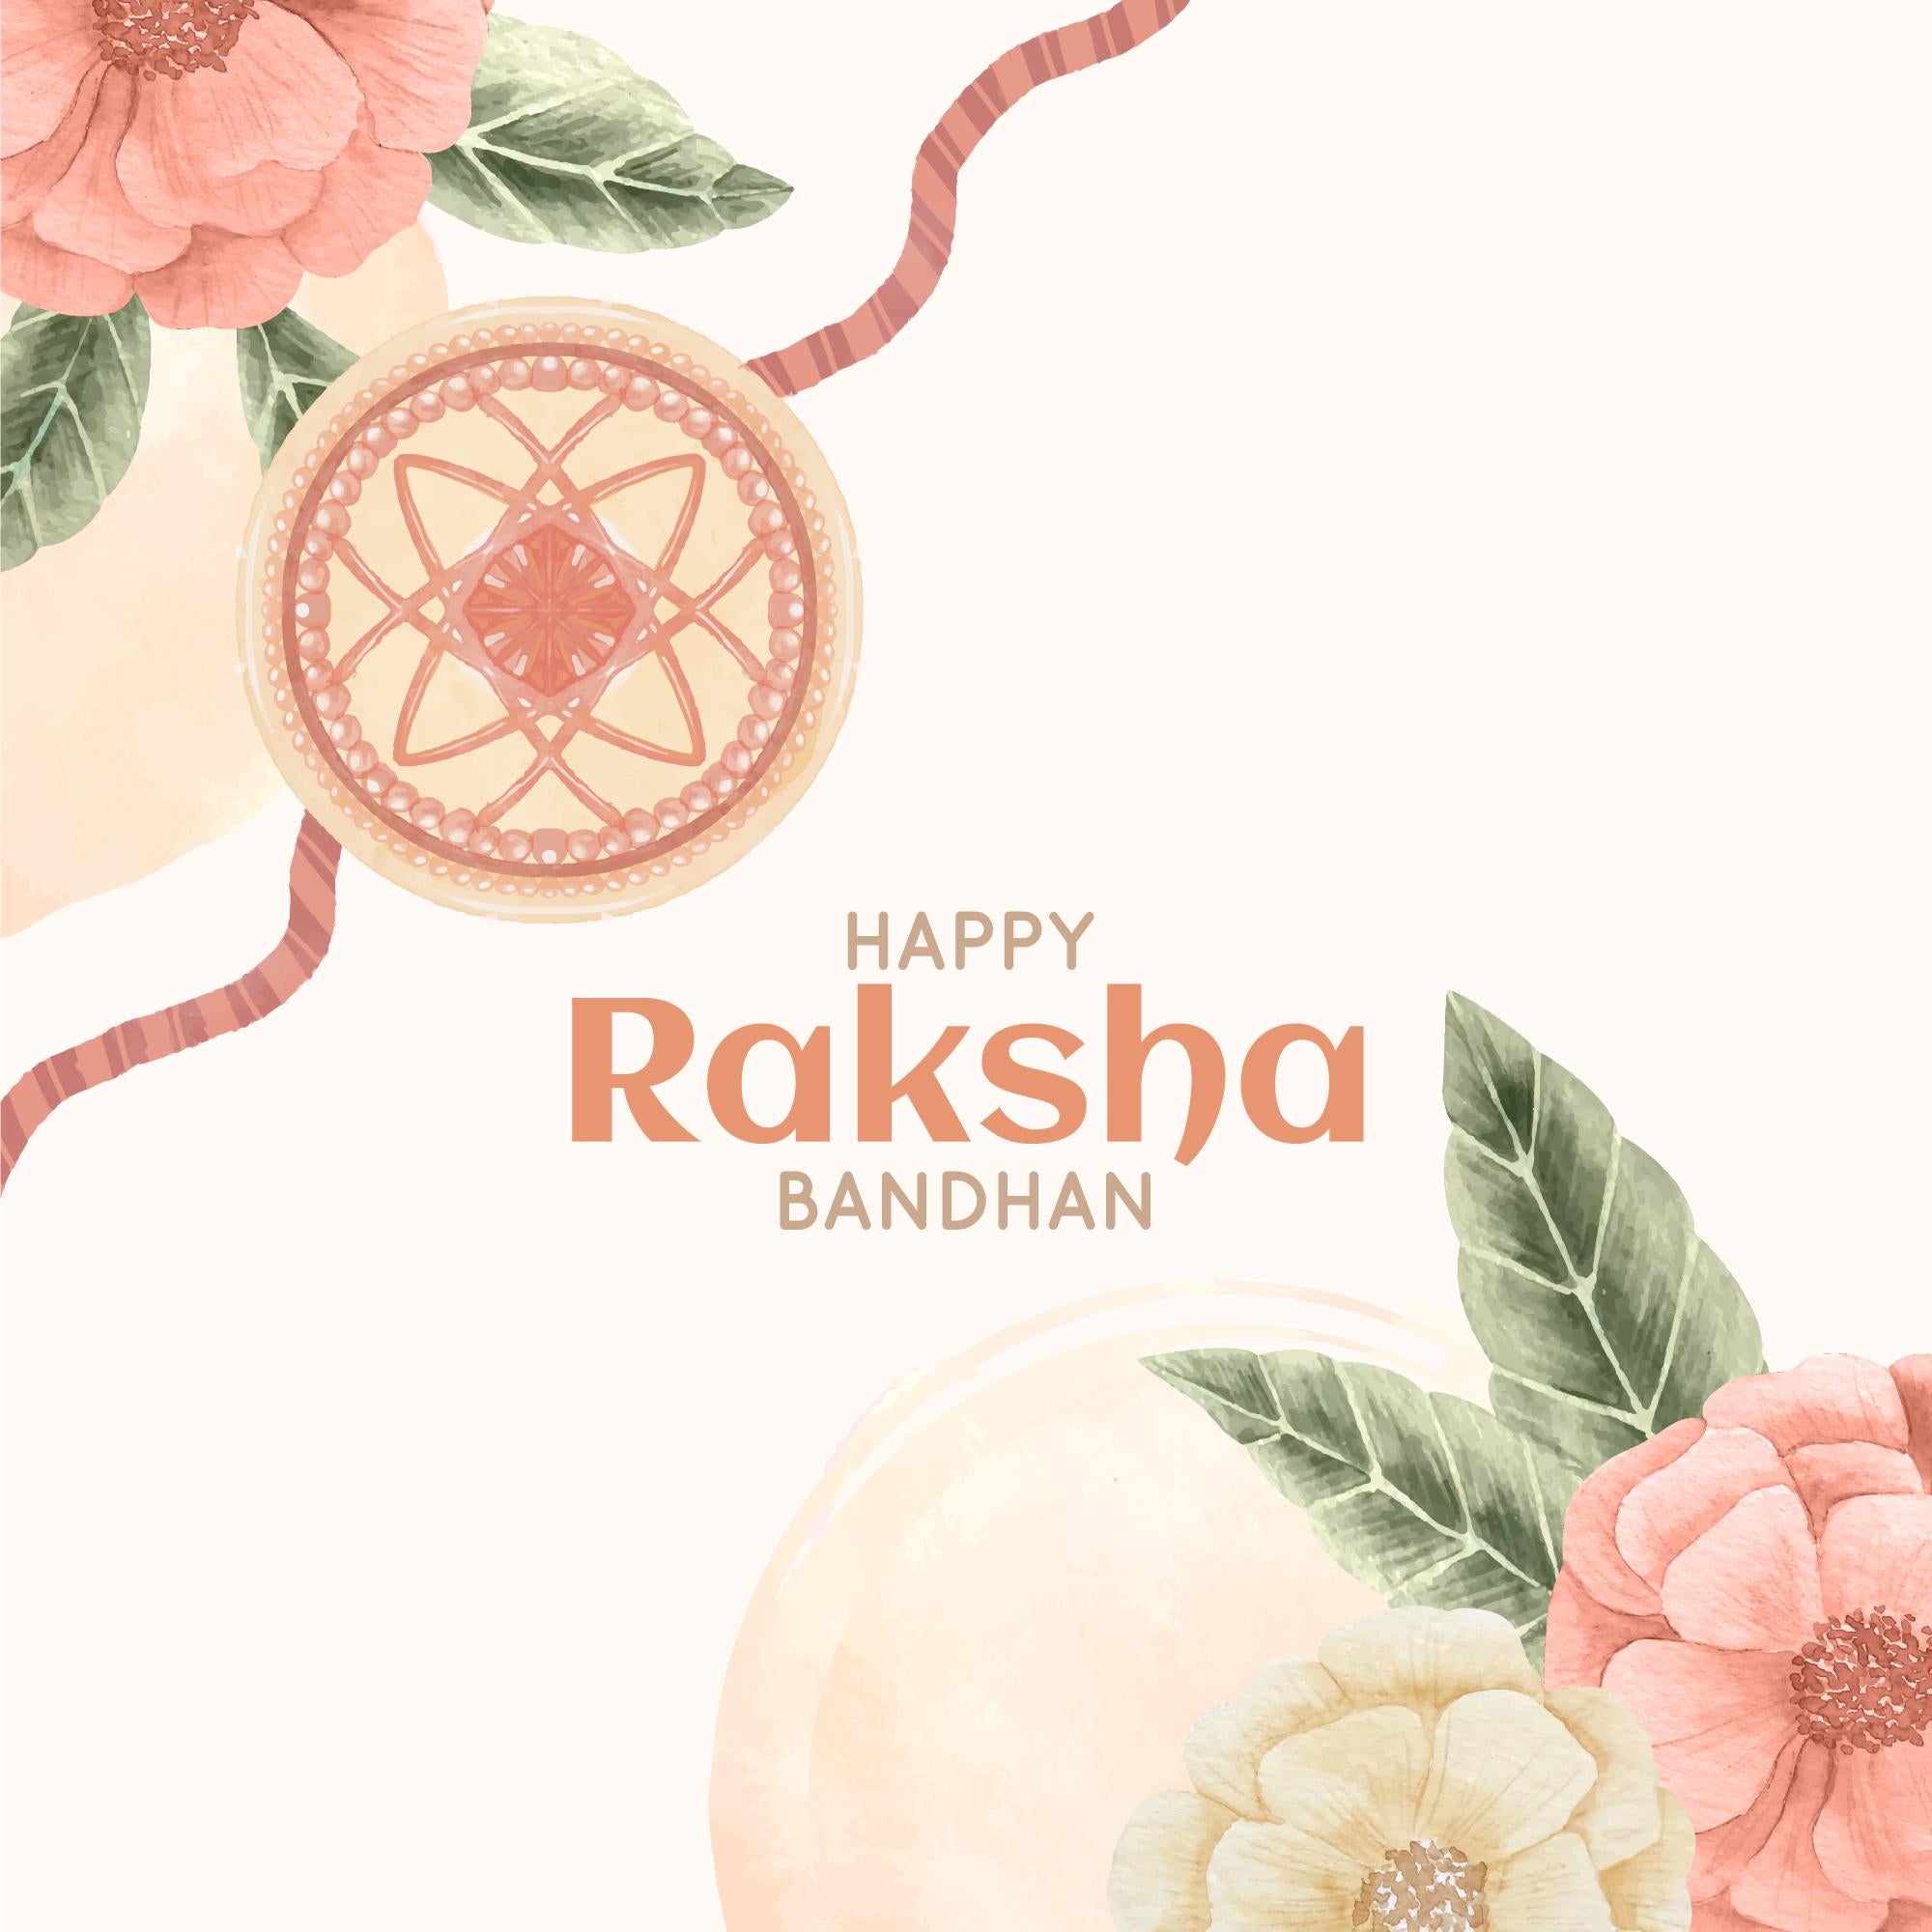 The Rakhi Connection - 10 Fascinating Raksha Bandhan Stories That You Probably Didn't Know